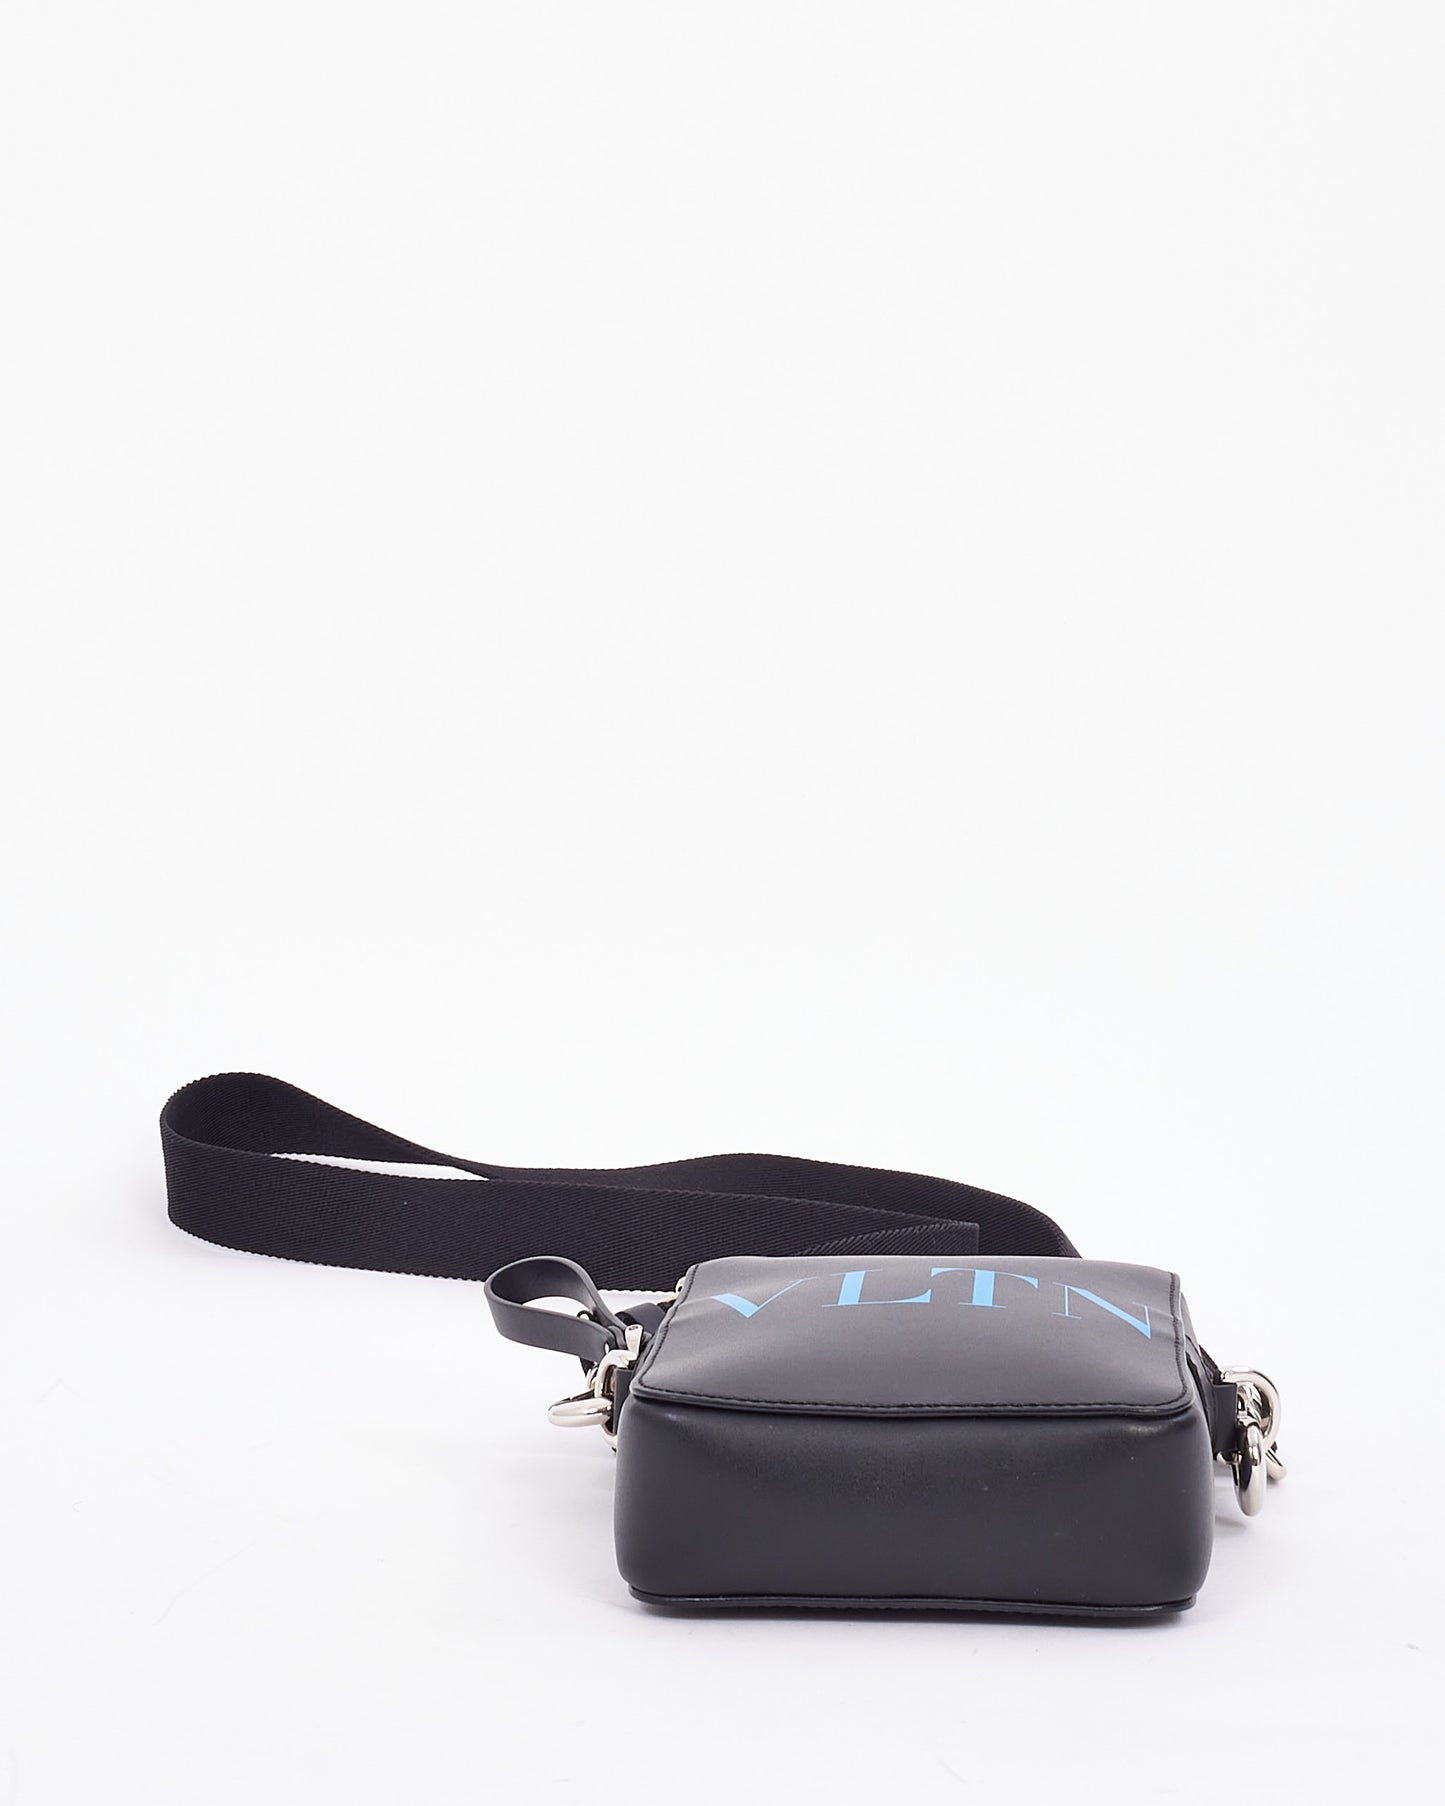 Valentino Black Leather Small VLTN Crossbody Bag